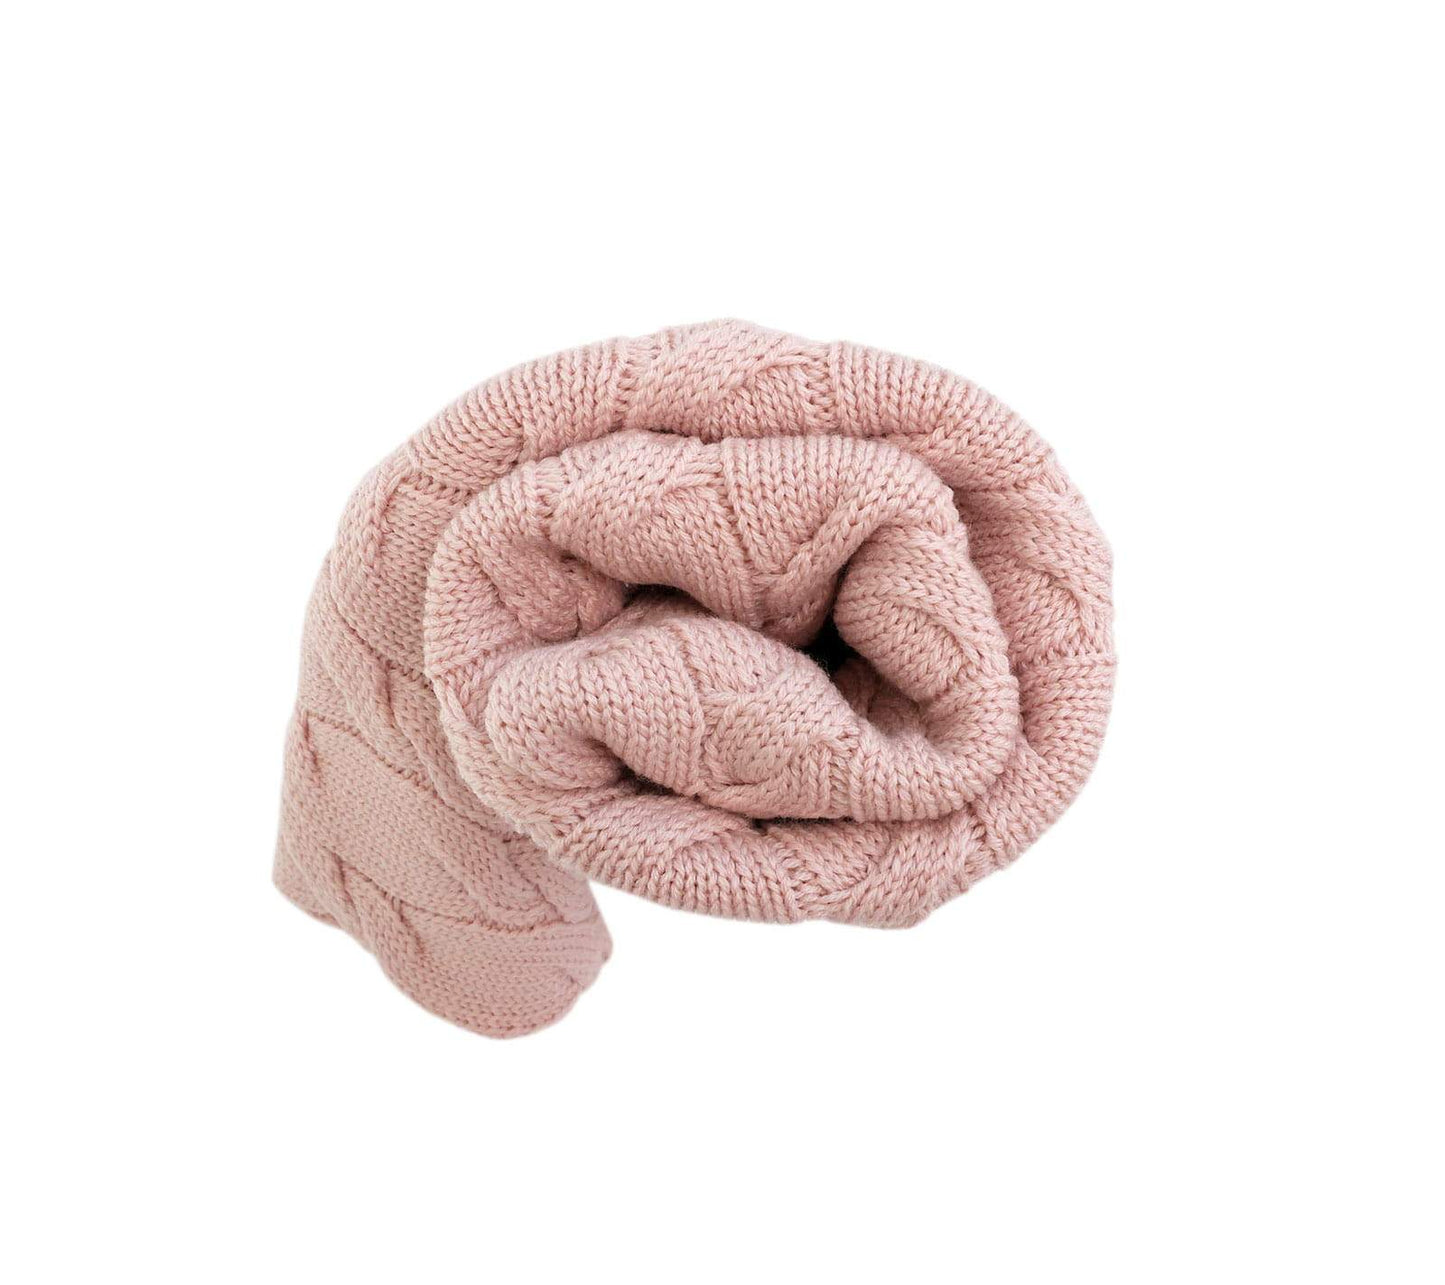 Merino Wool Blanket - Powder pink - premium collection Blanket Lullalove 